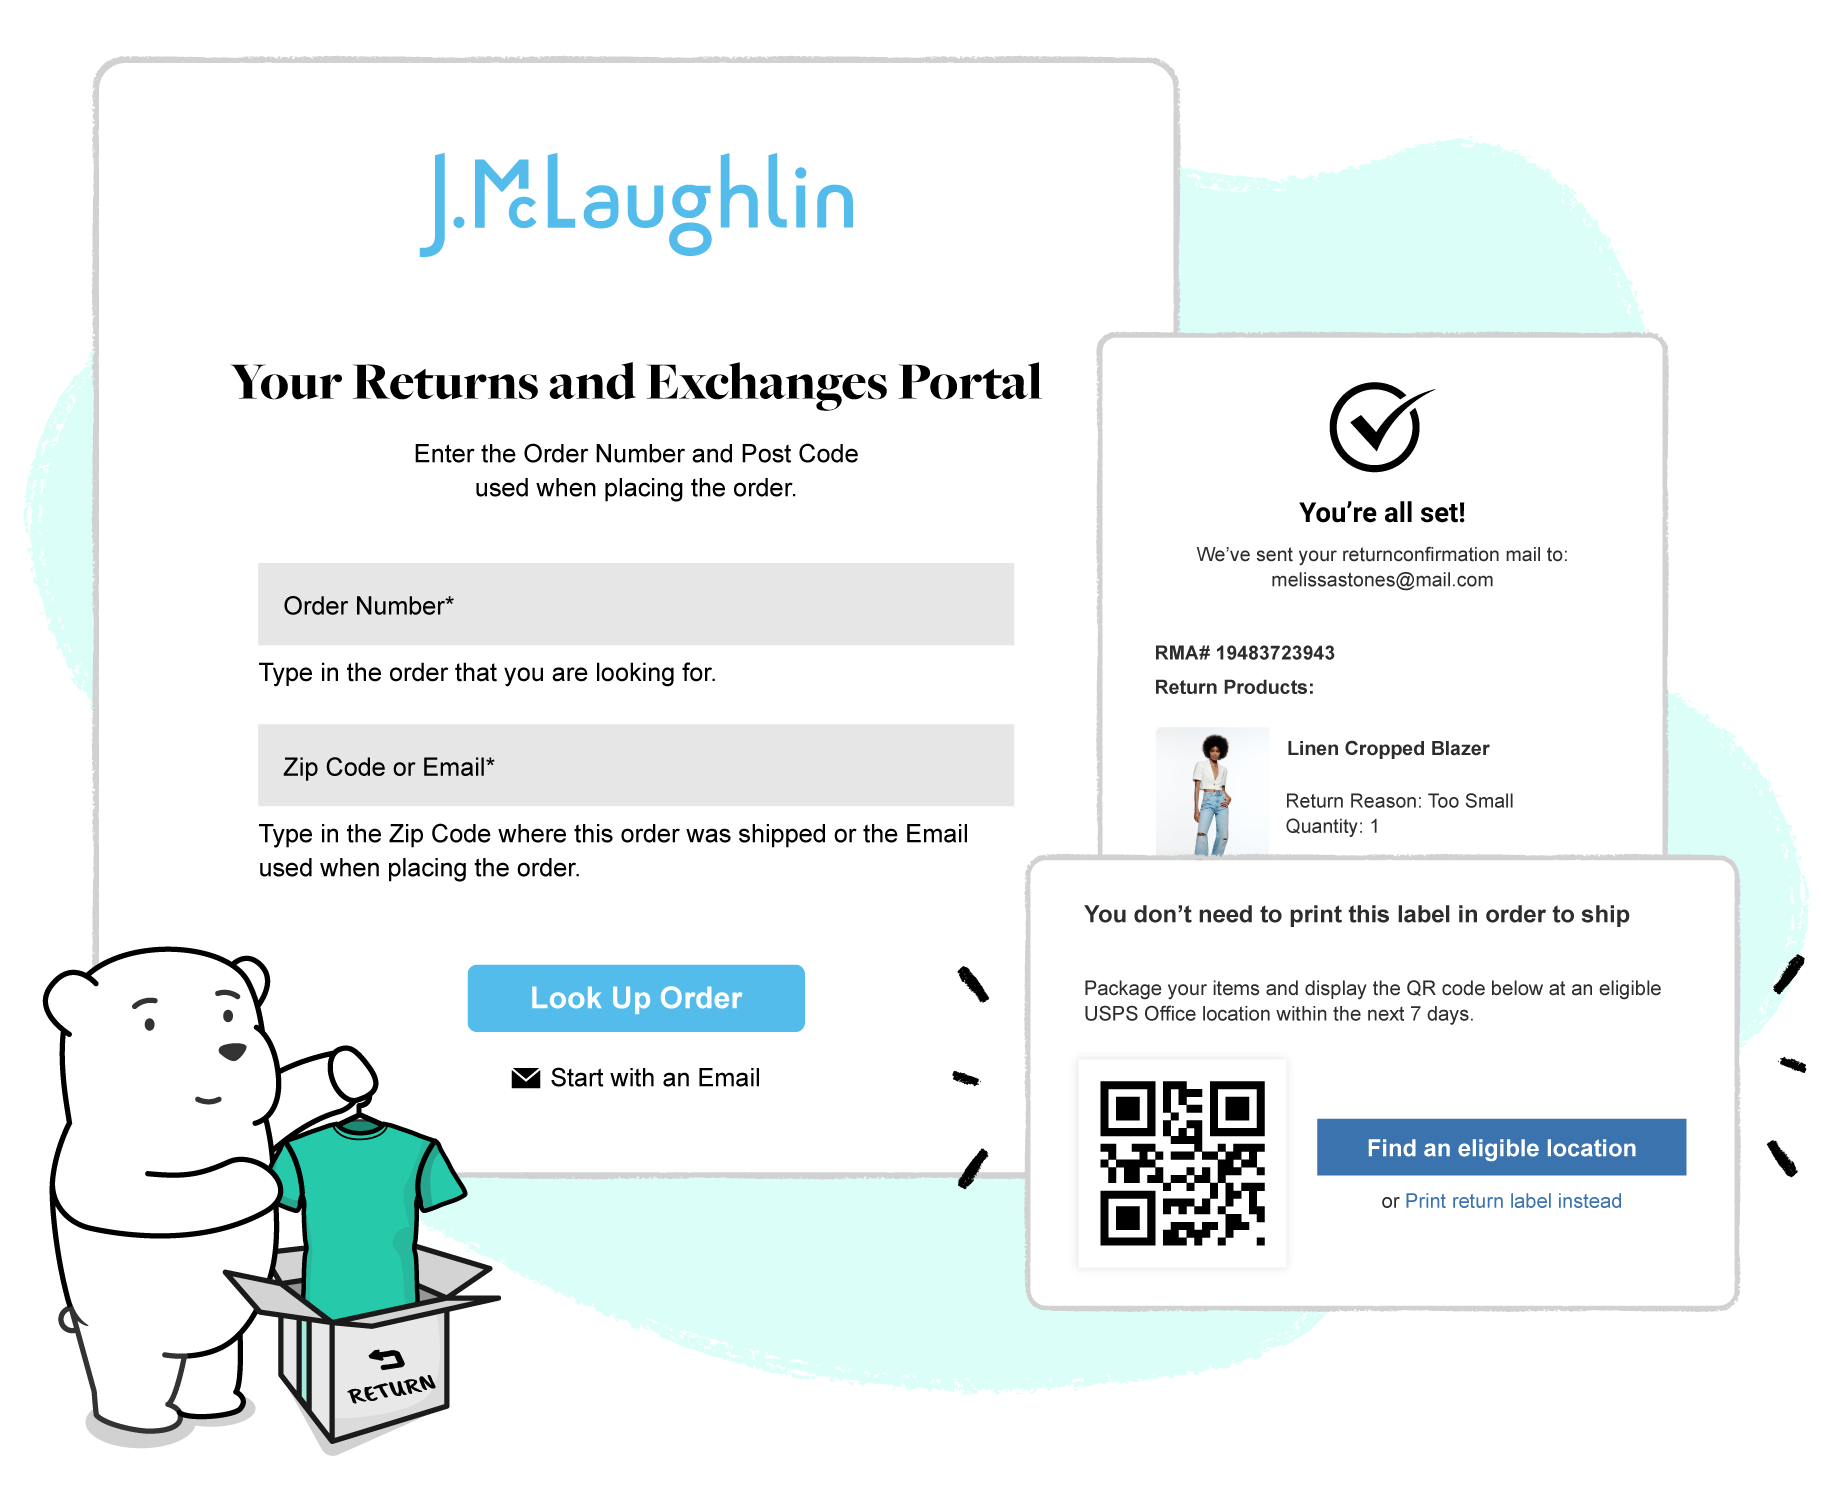 jmclaughlin using WeSupply returns